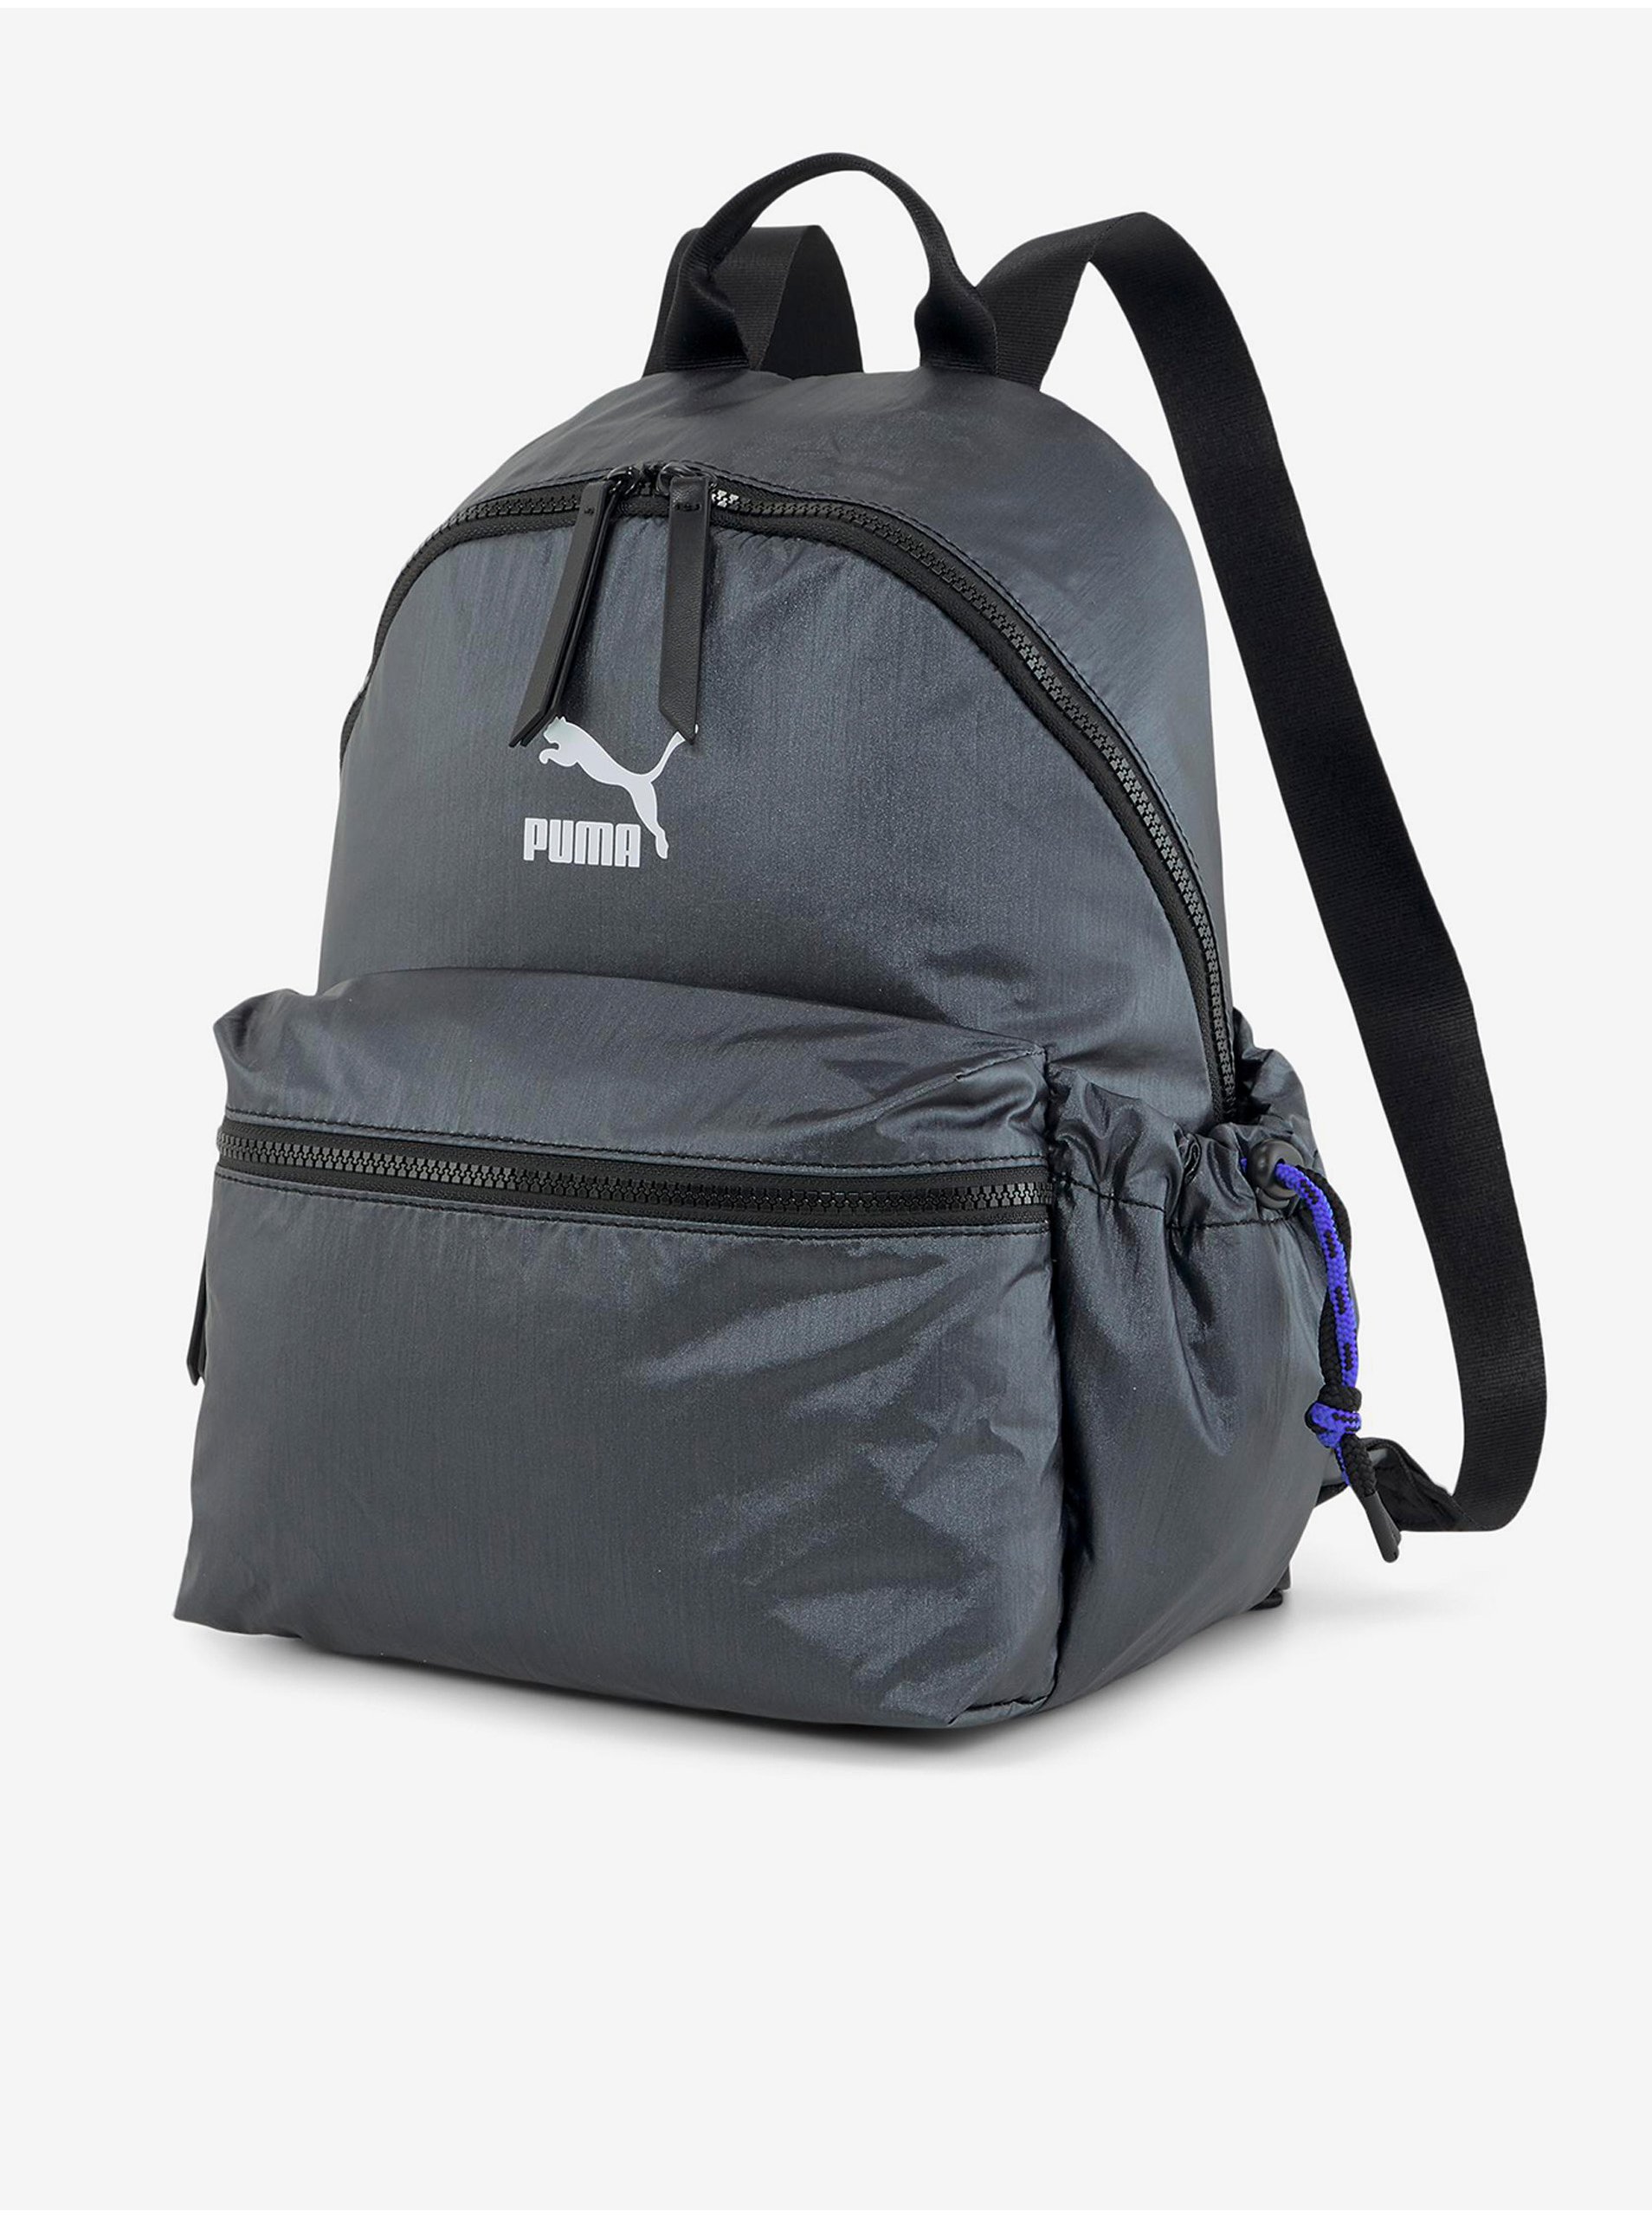 Puma Prime Time Backpack PUMA Black - Women